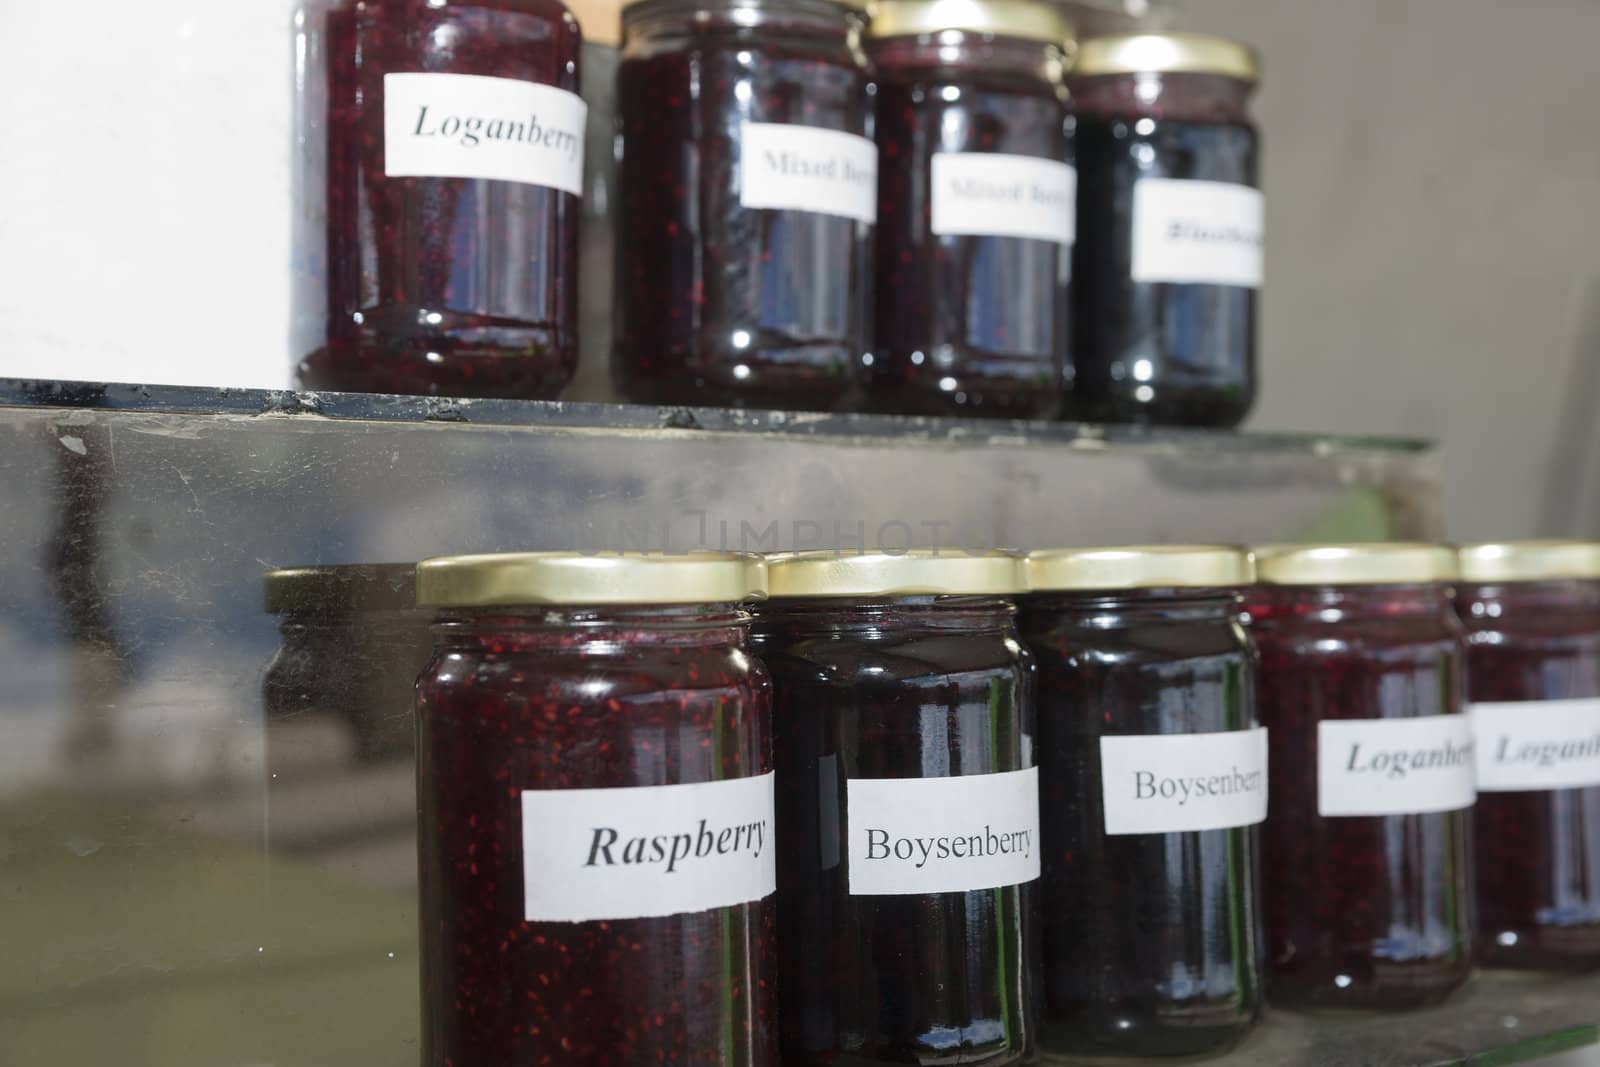 Homemade berry jam in jars.